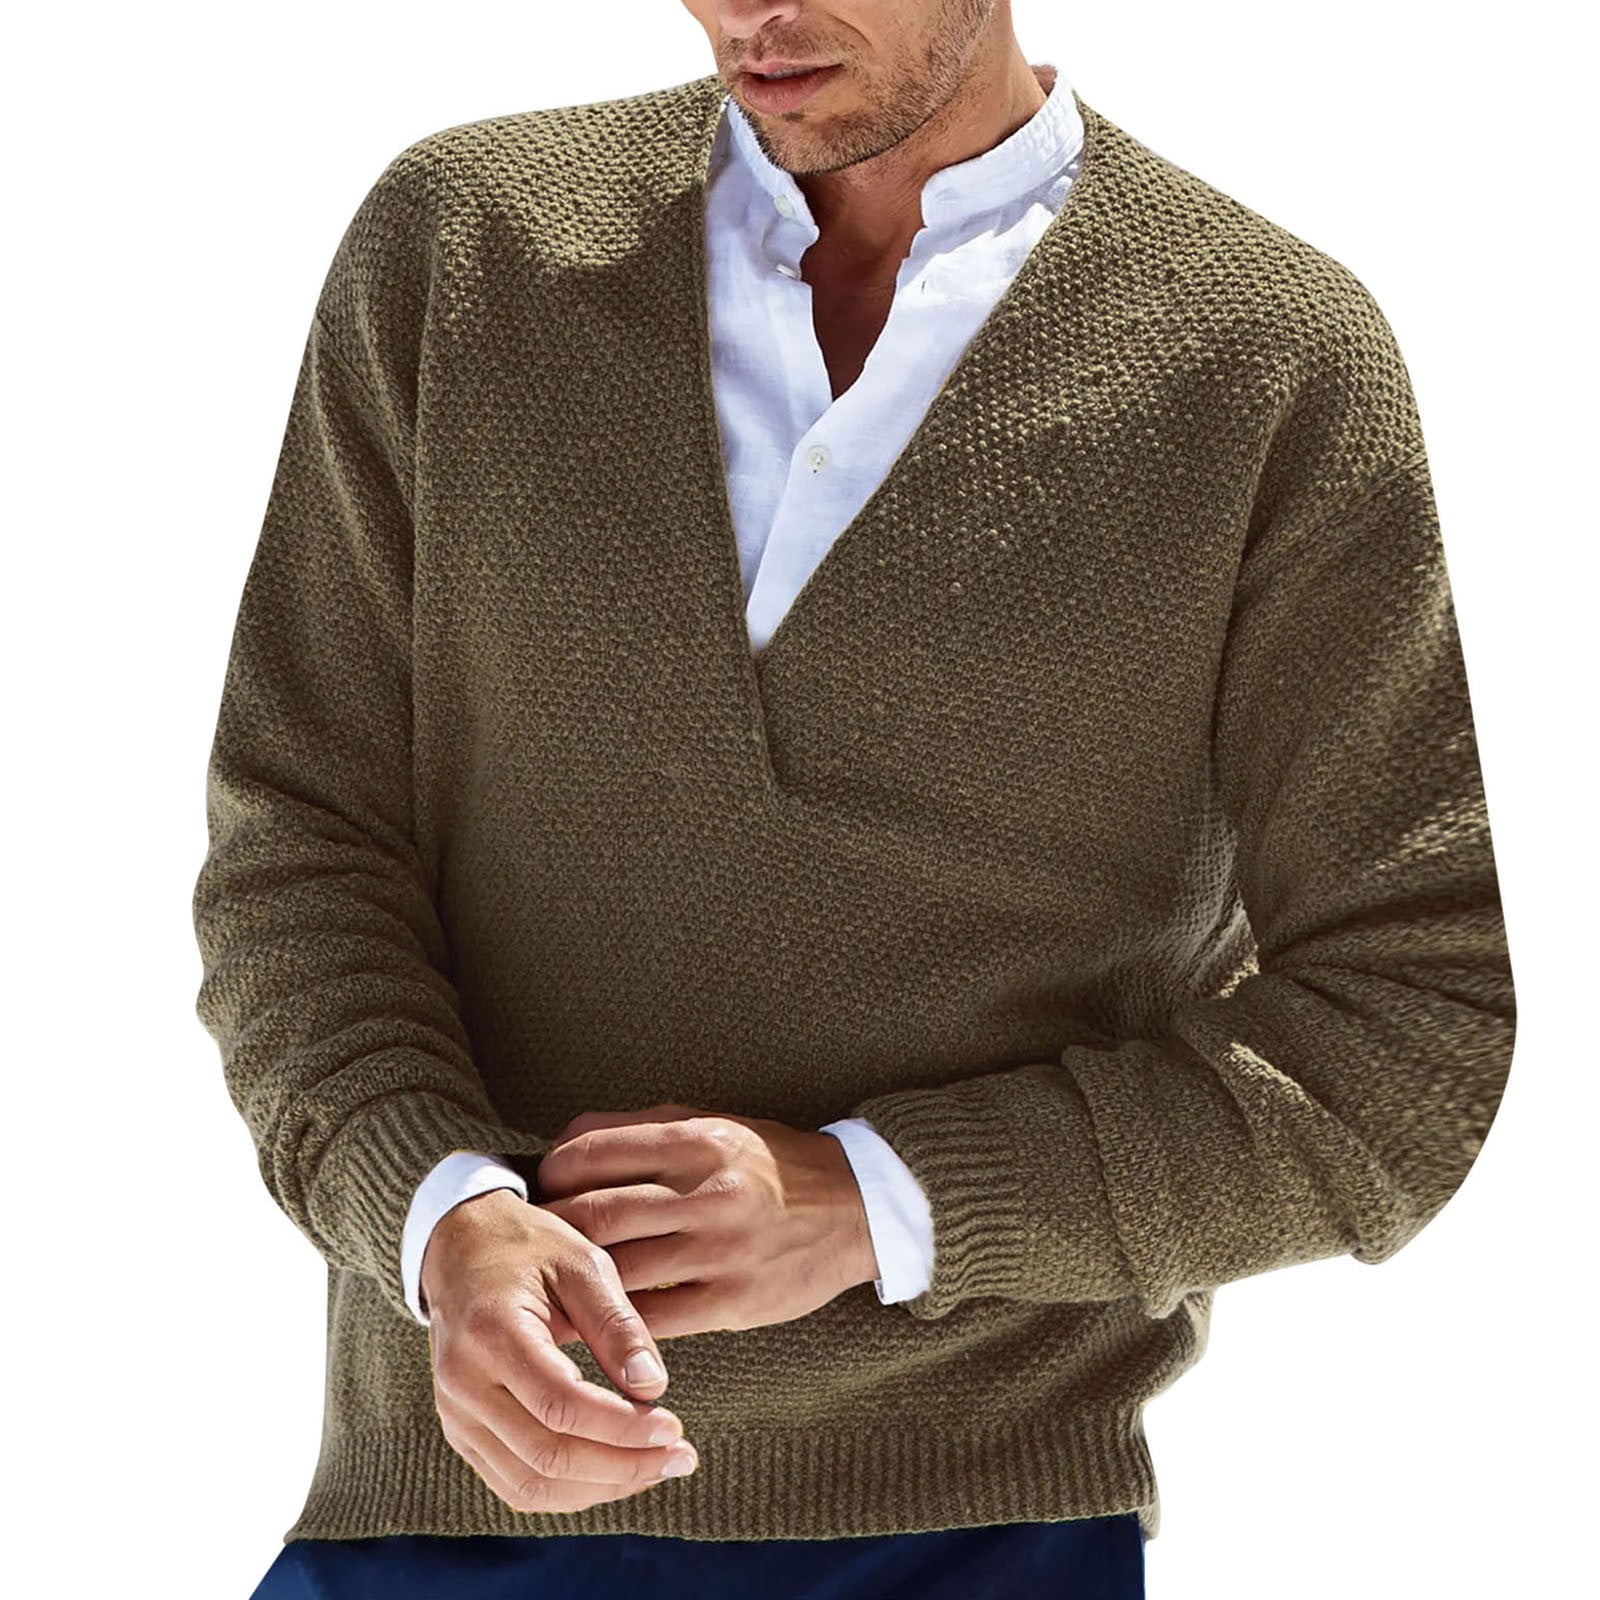 Pedort Men's Waffle Knit V Neck Sweater Casual Long Sleeve Knit Pullover  Jumper Tops Blouse Dark Blue,S 